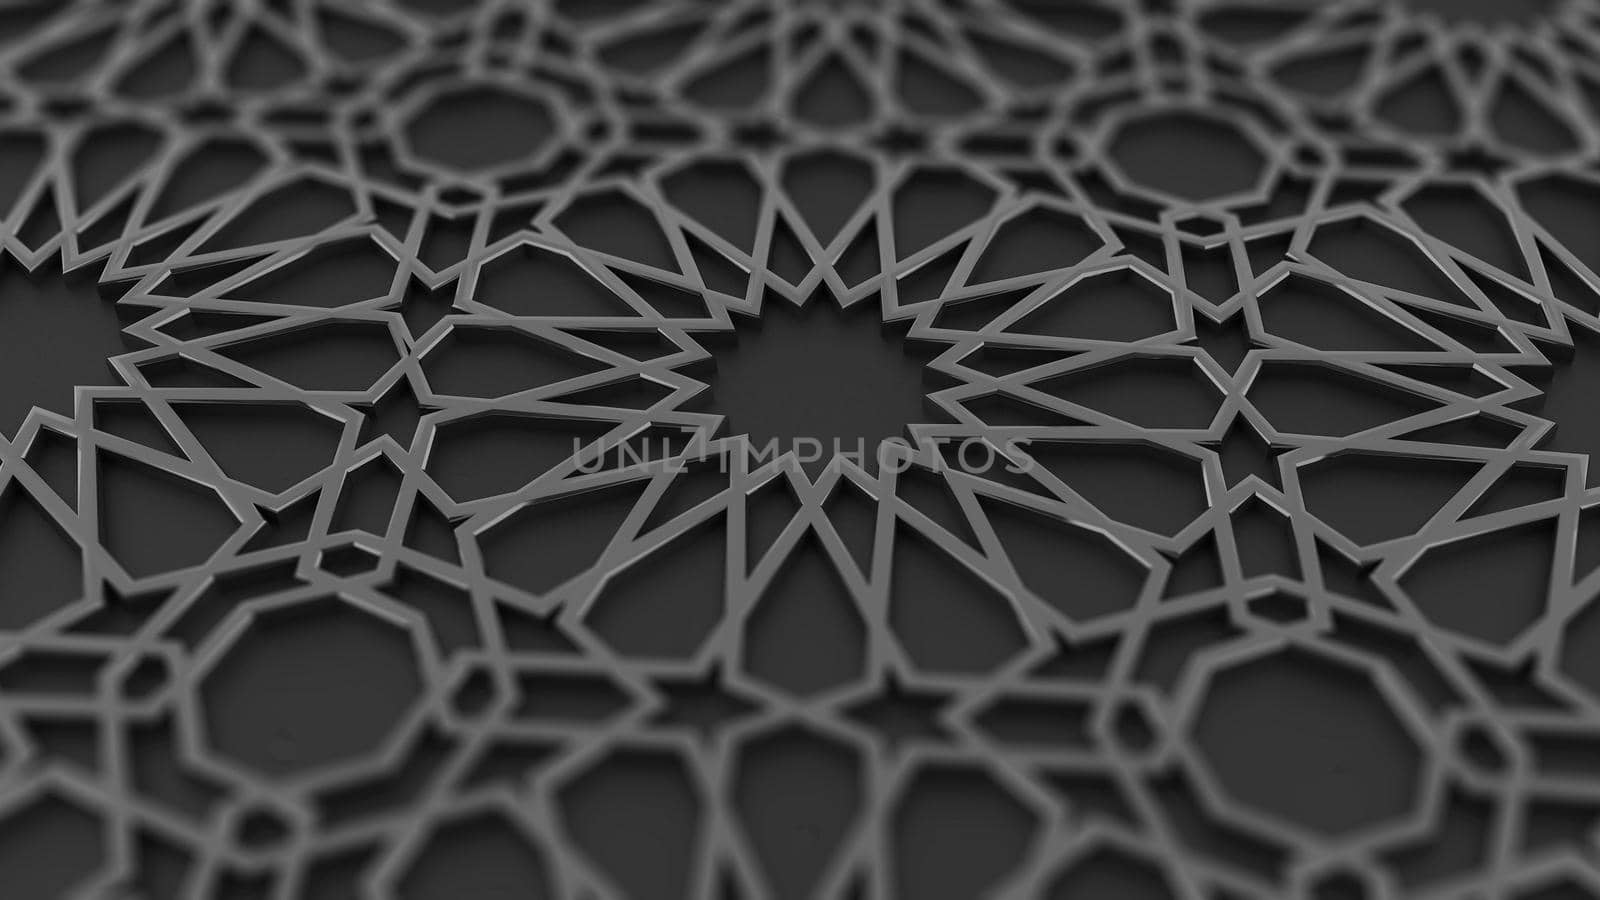 Black islamic pattern in 3d,perspective wiev. Ramadan arabesque, black moroccan ornament.